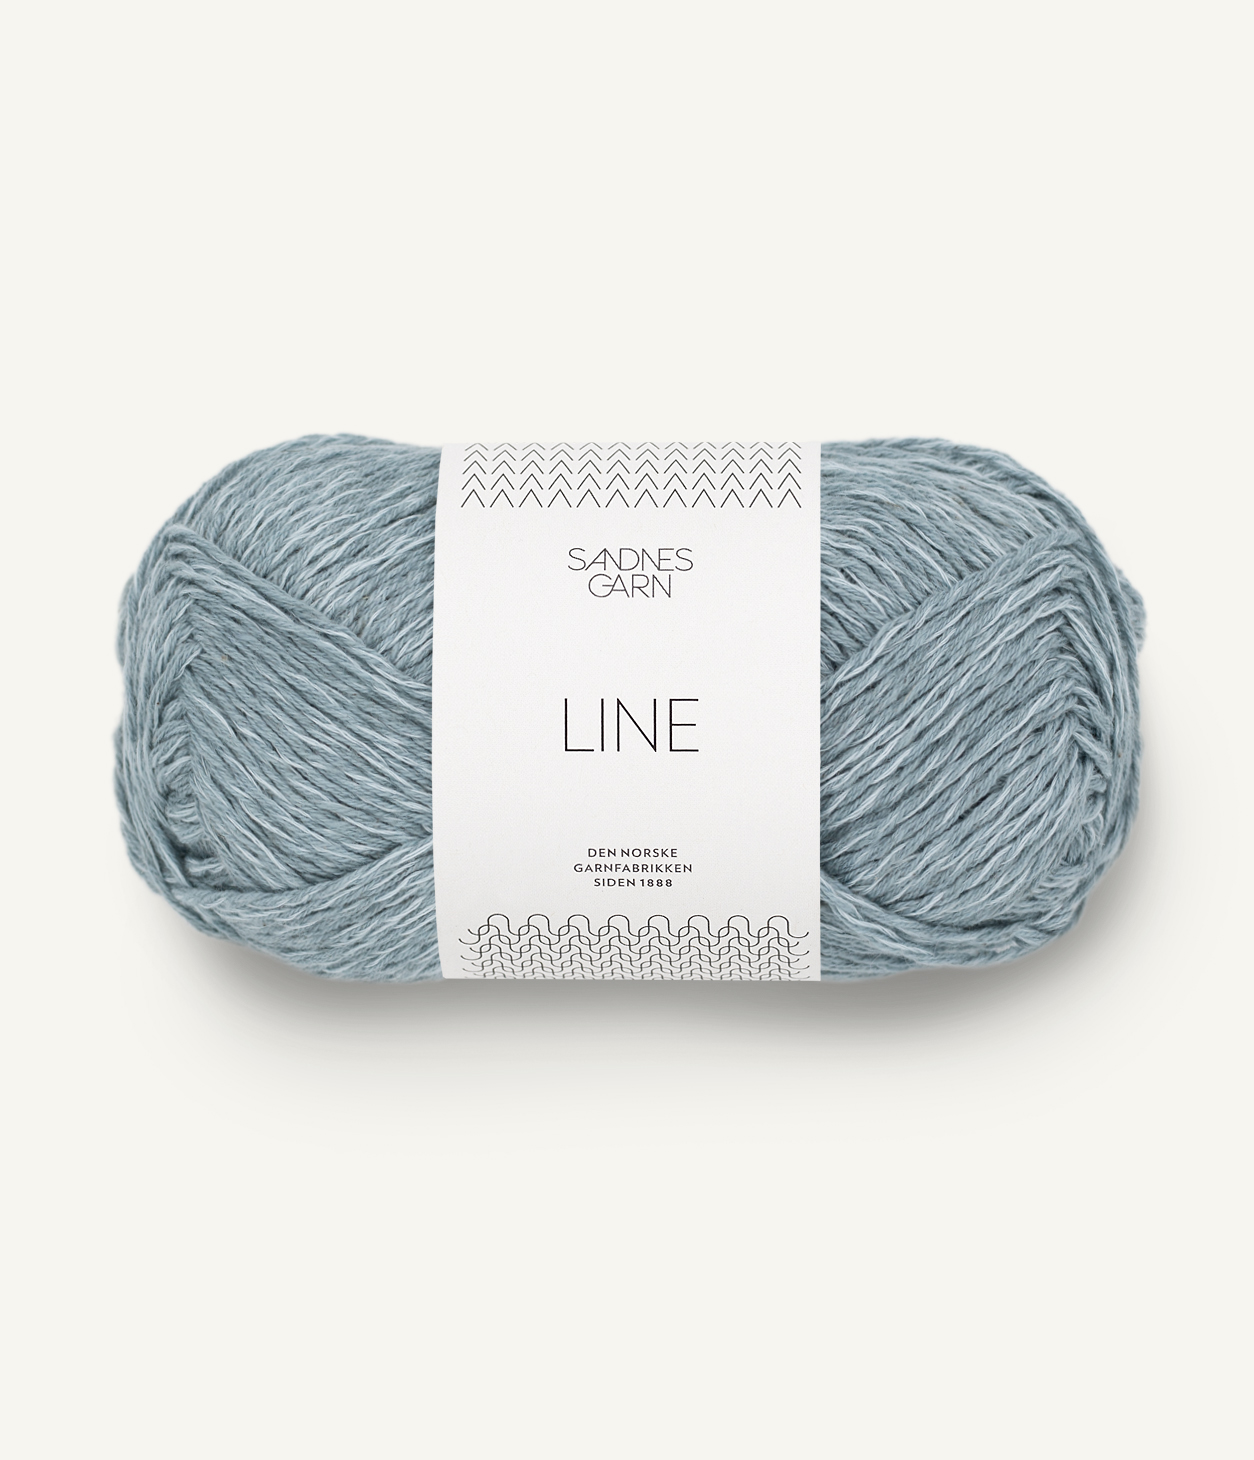 LINE 6531 Isblå